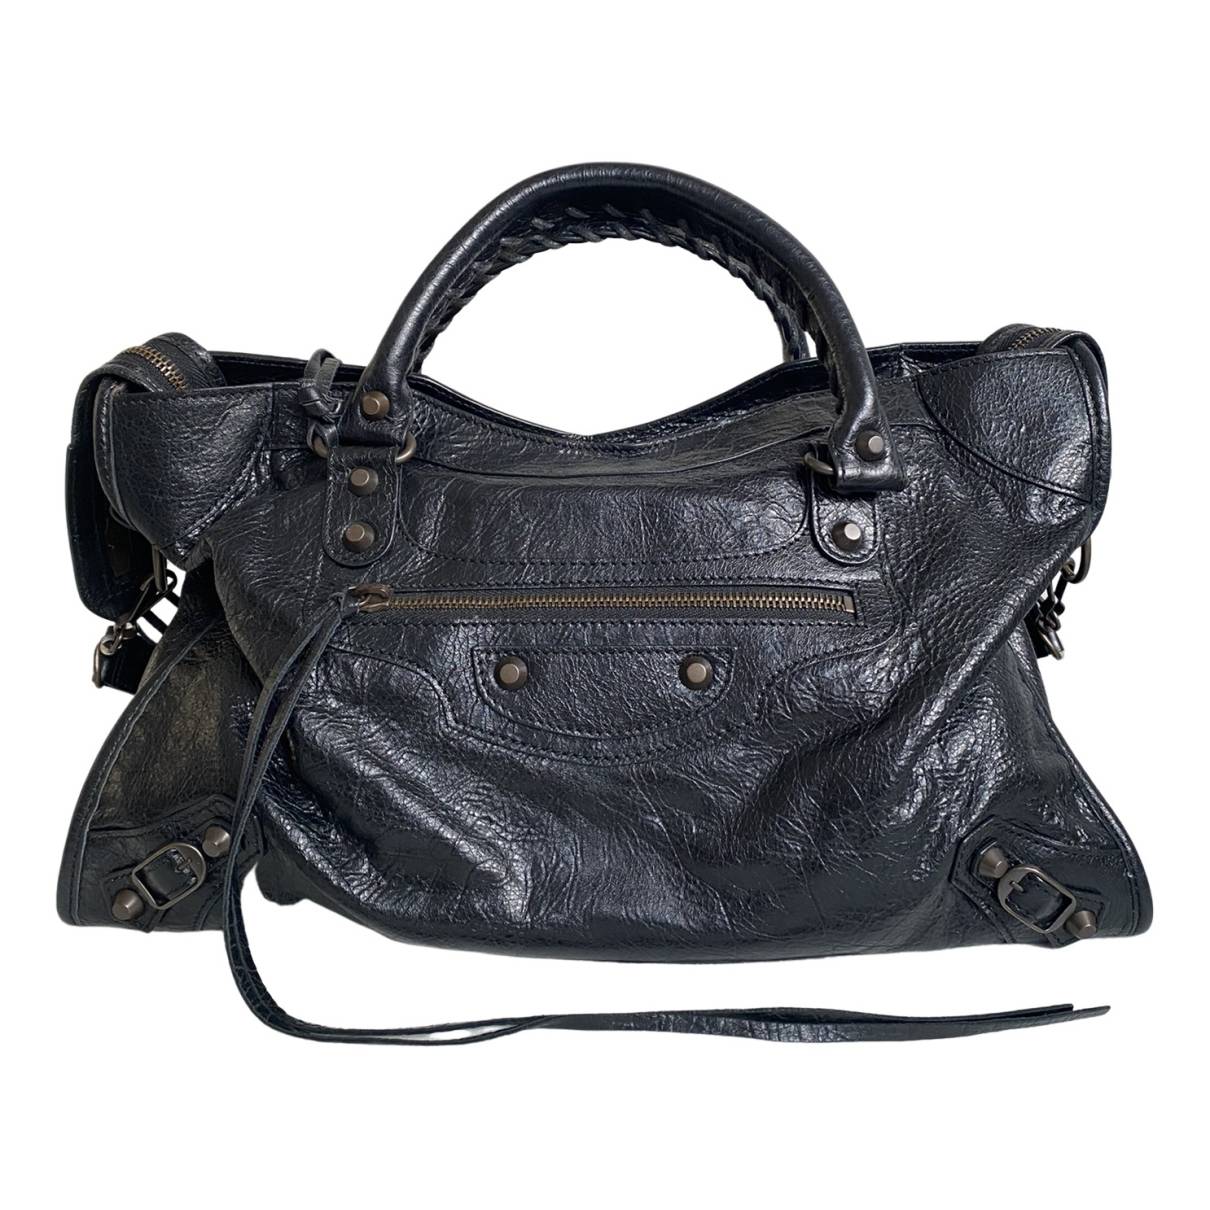 City leather handbag Balenciaga Black in Leather - 34795856